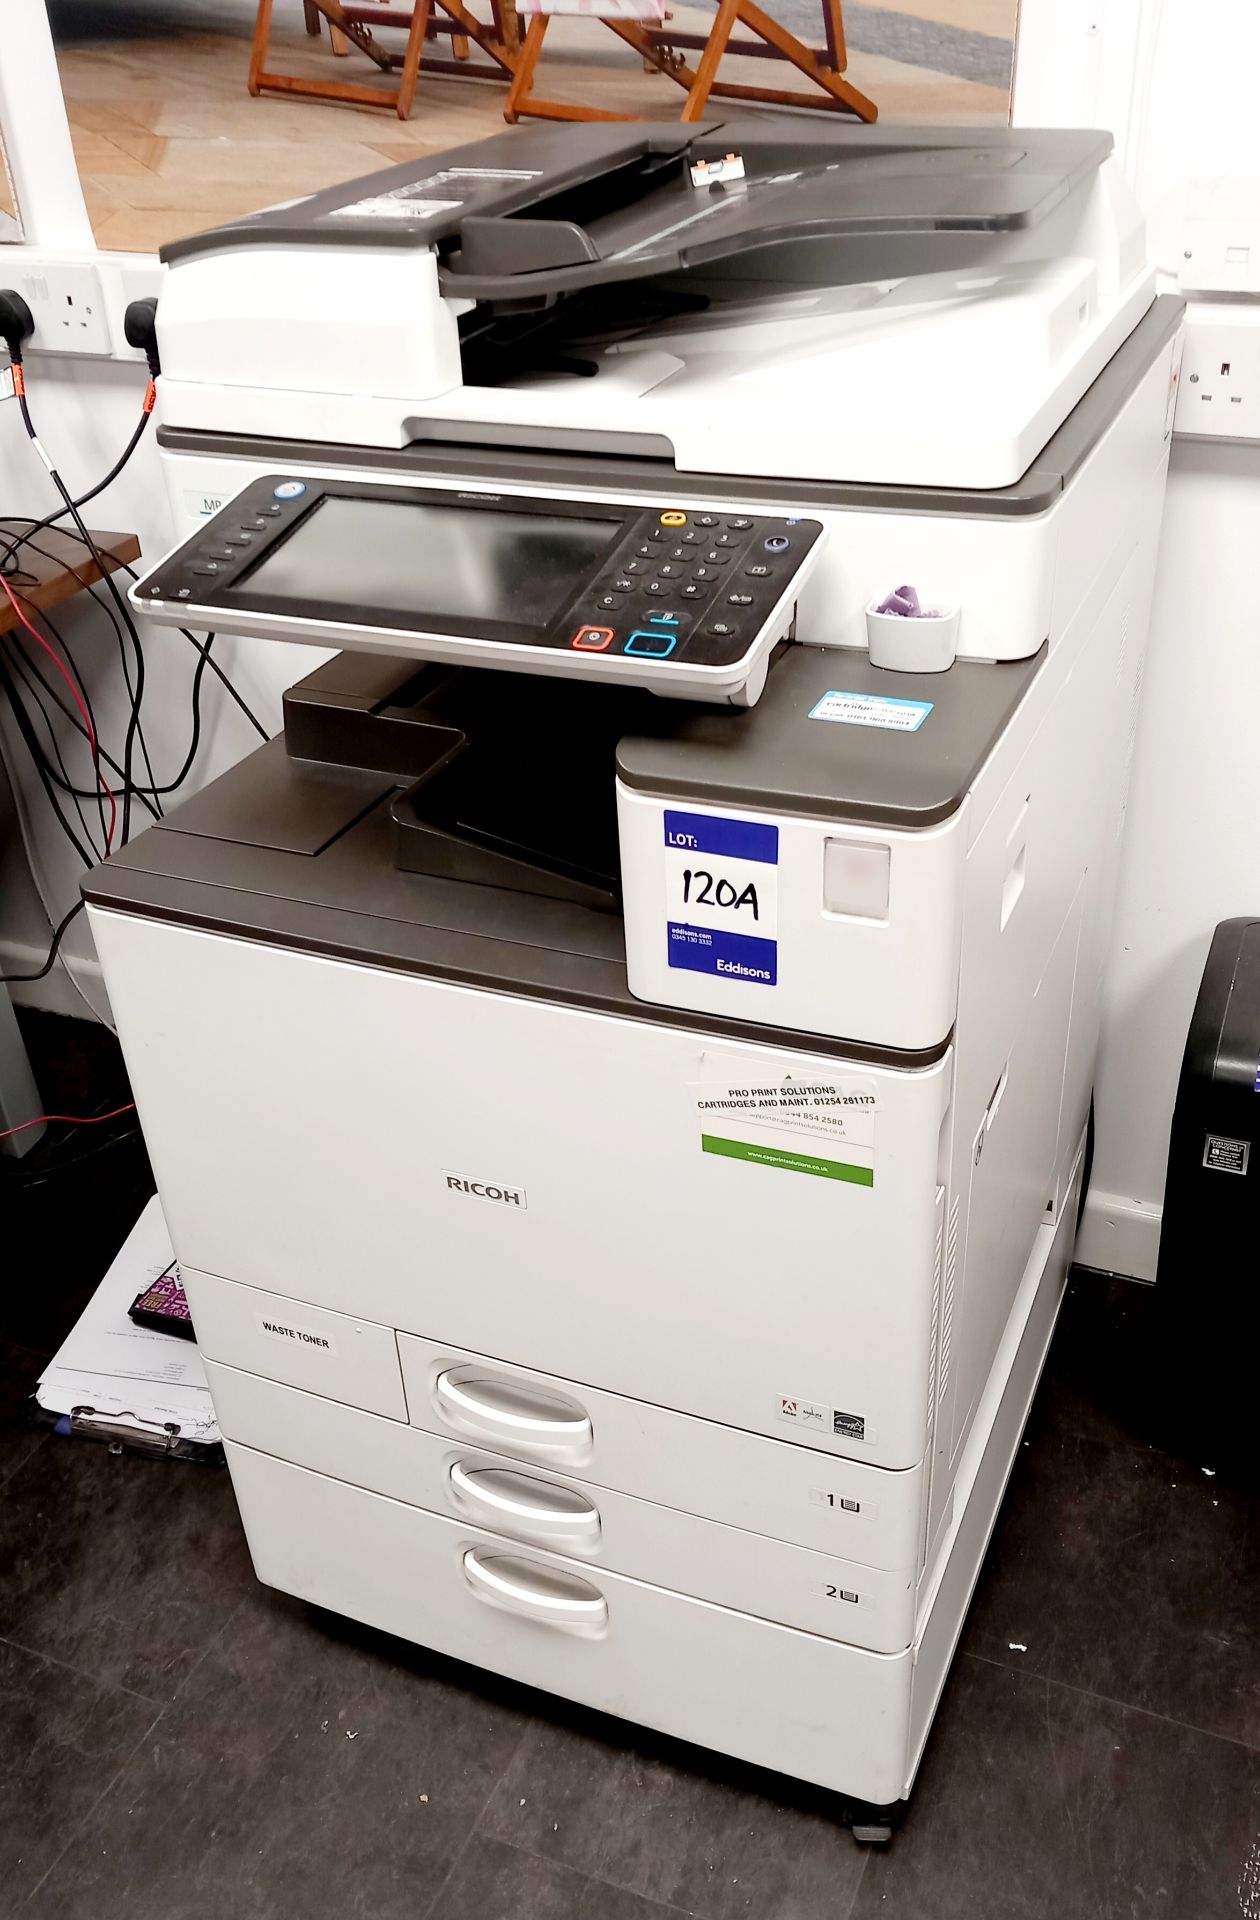 Ricoh MPC2503 printer